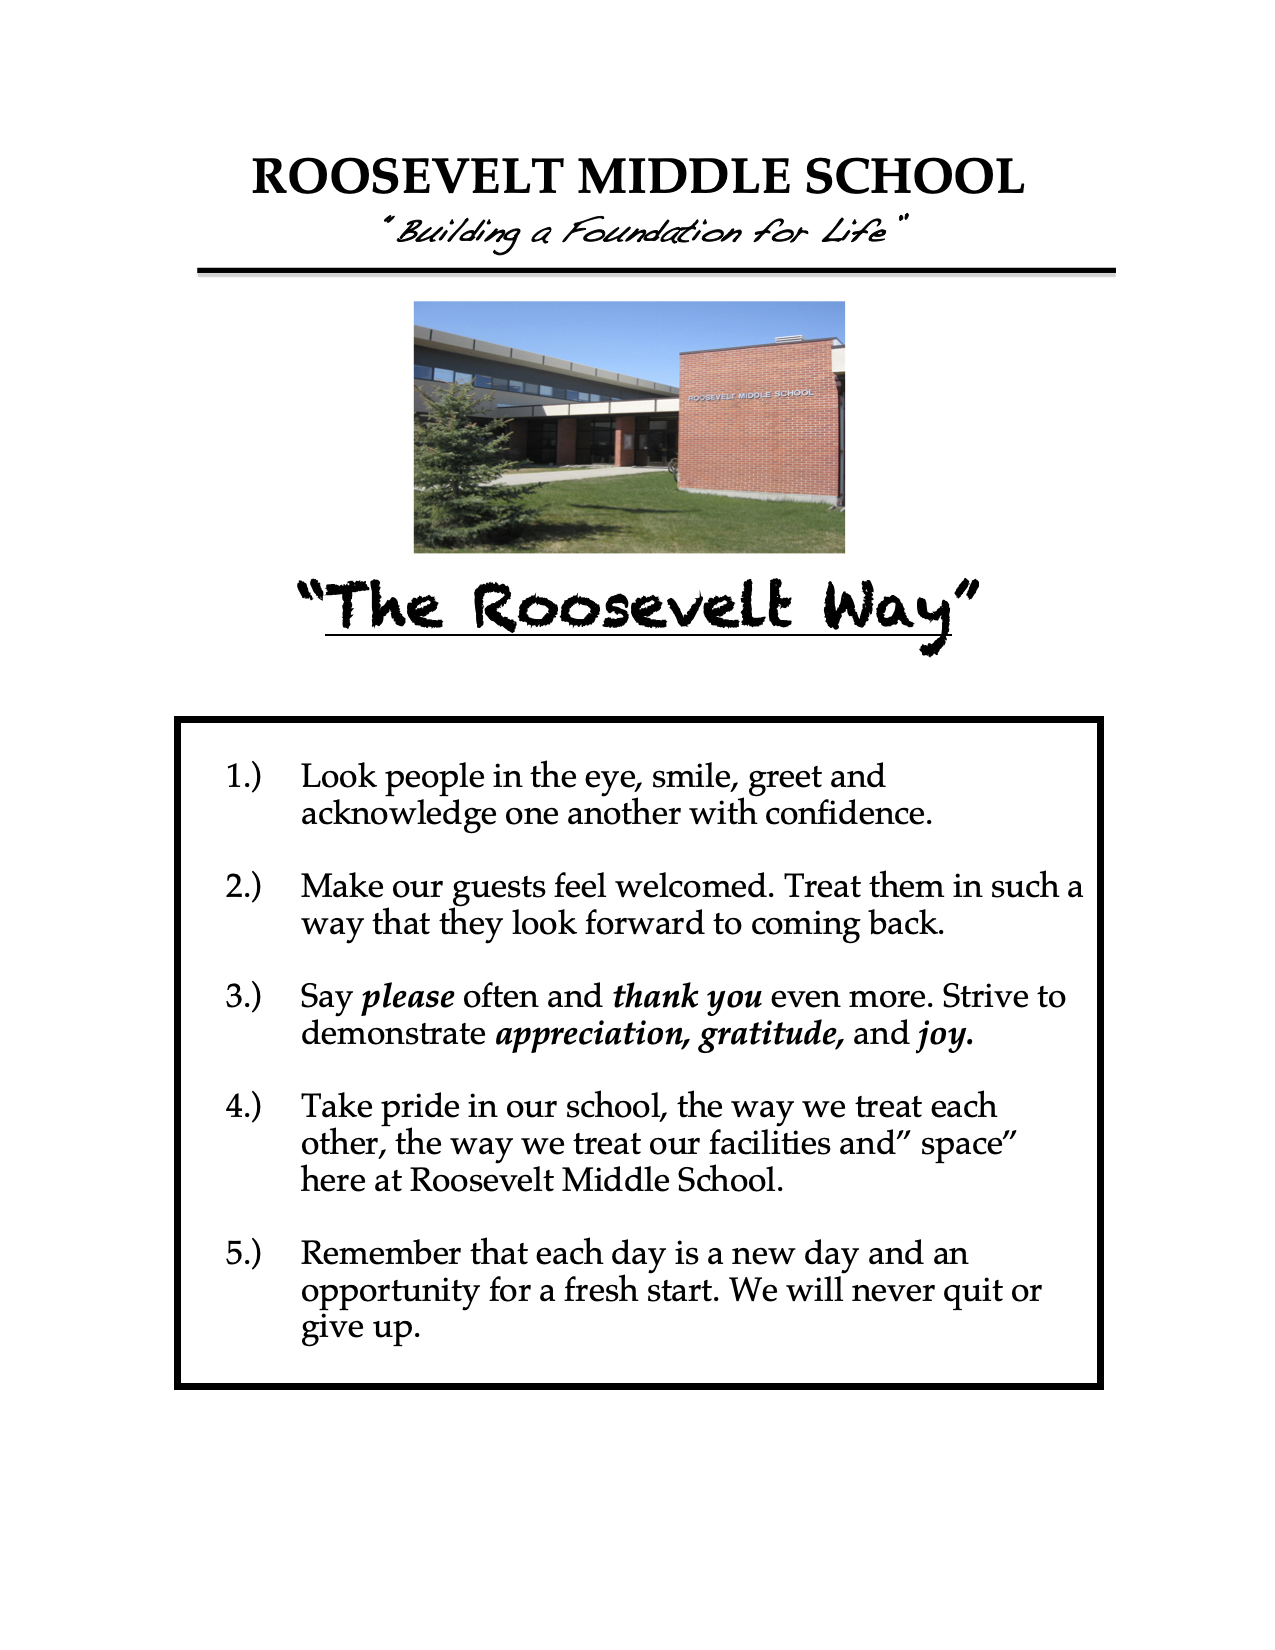 Roosevelt Way graphic